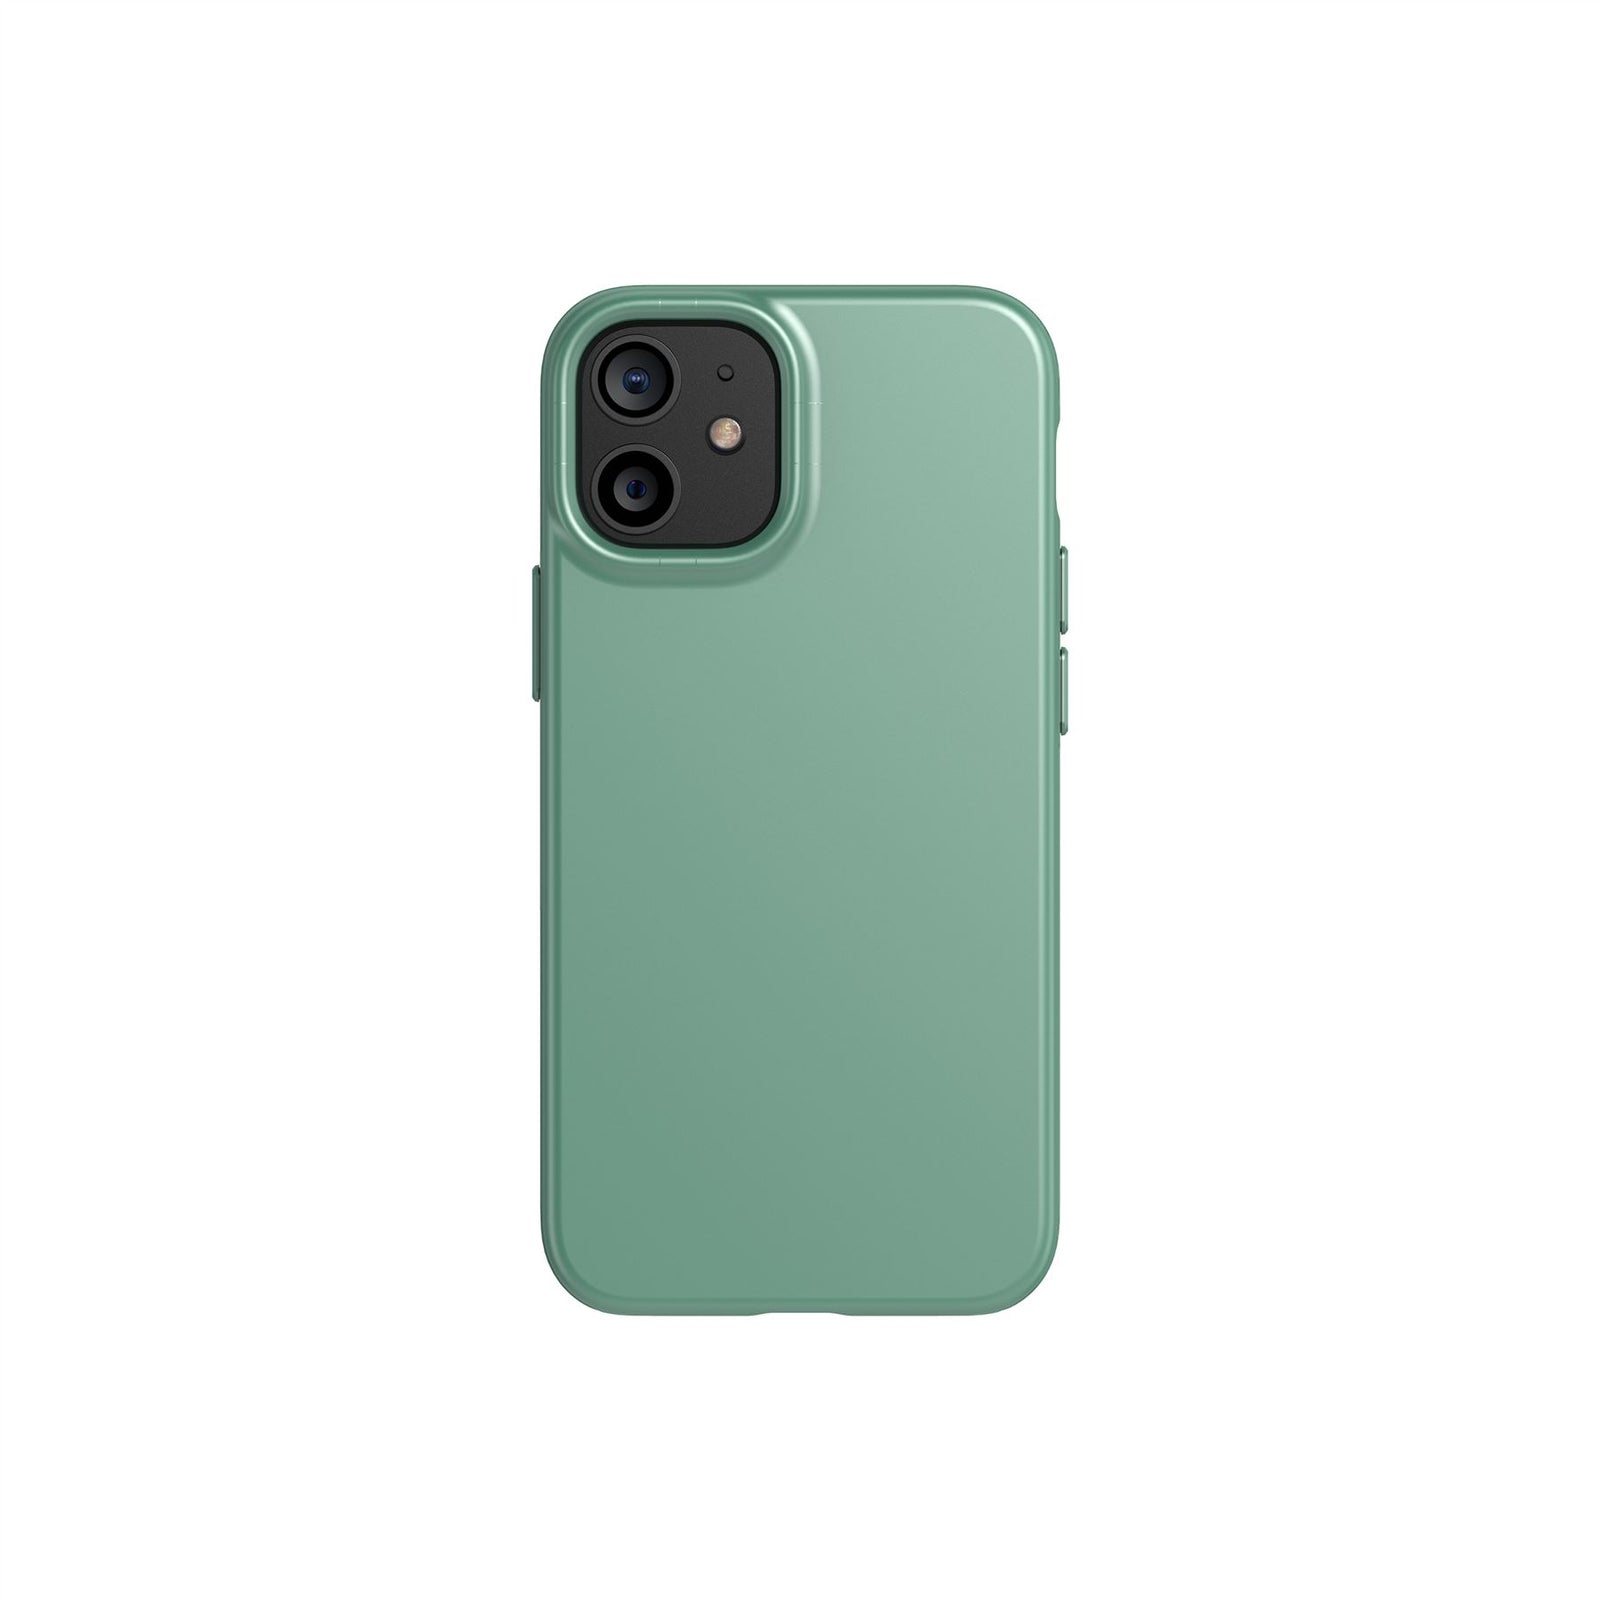 Evo Slim - Apple iPhone 12 mini Case - Midnight Green